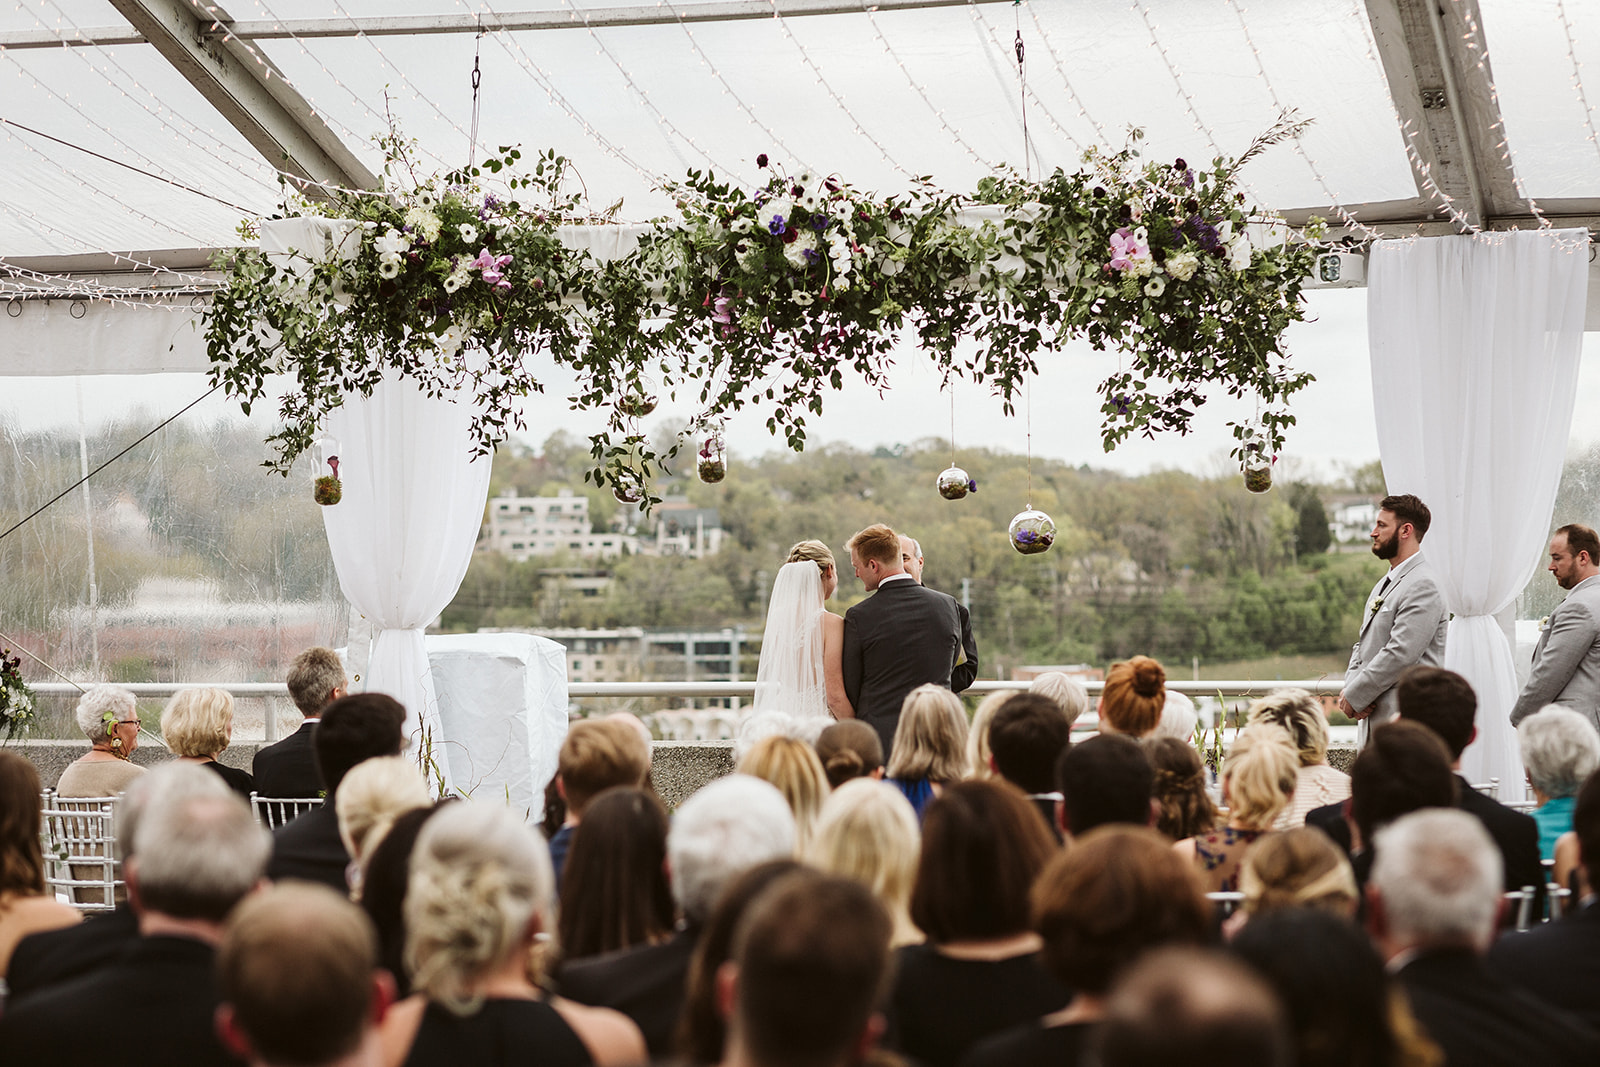 Bride and groom exchange vows beneath a hanging floral arrangement.